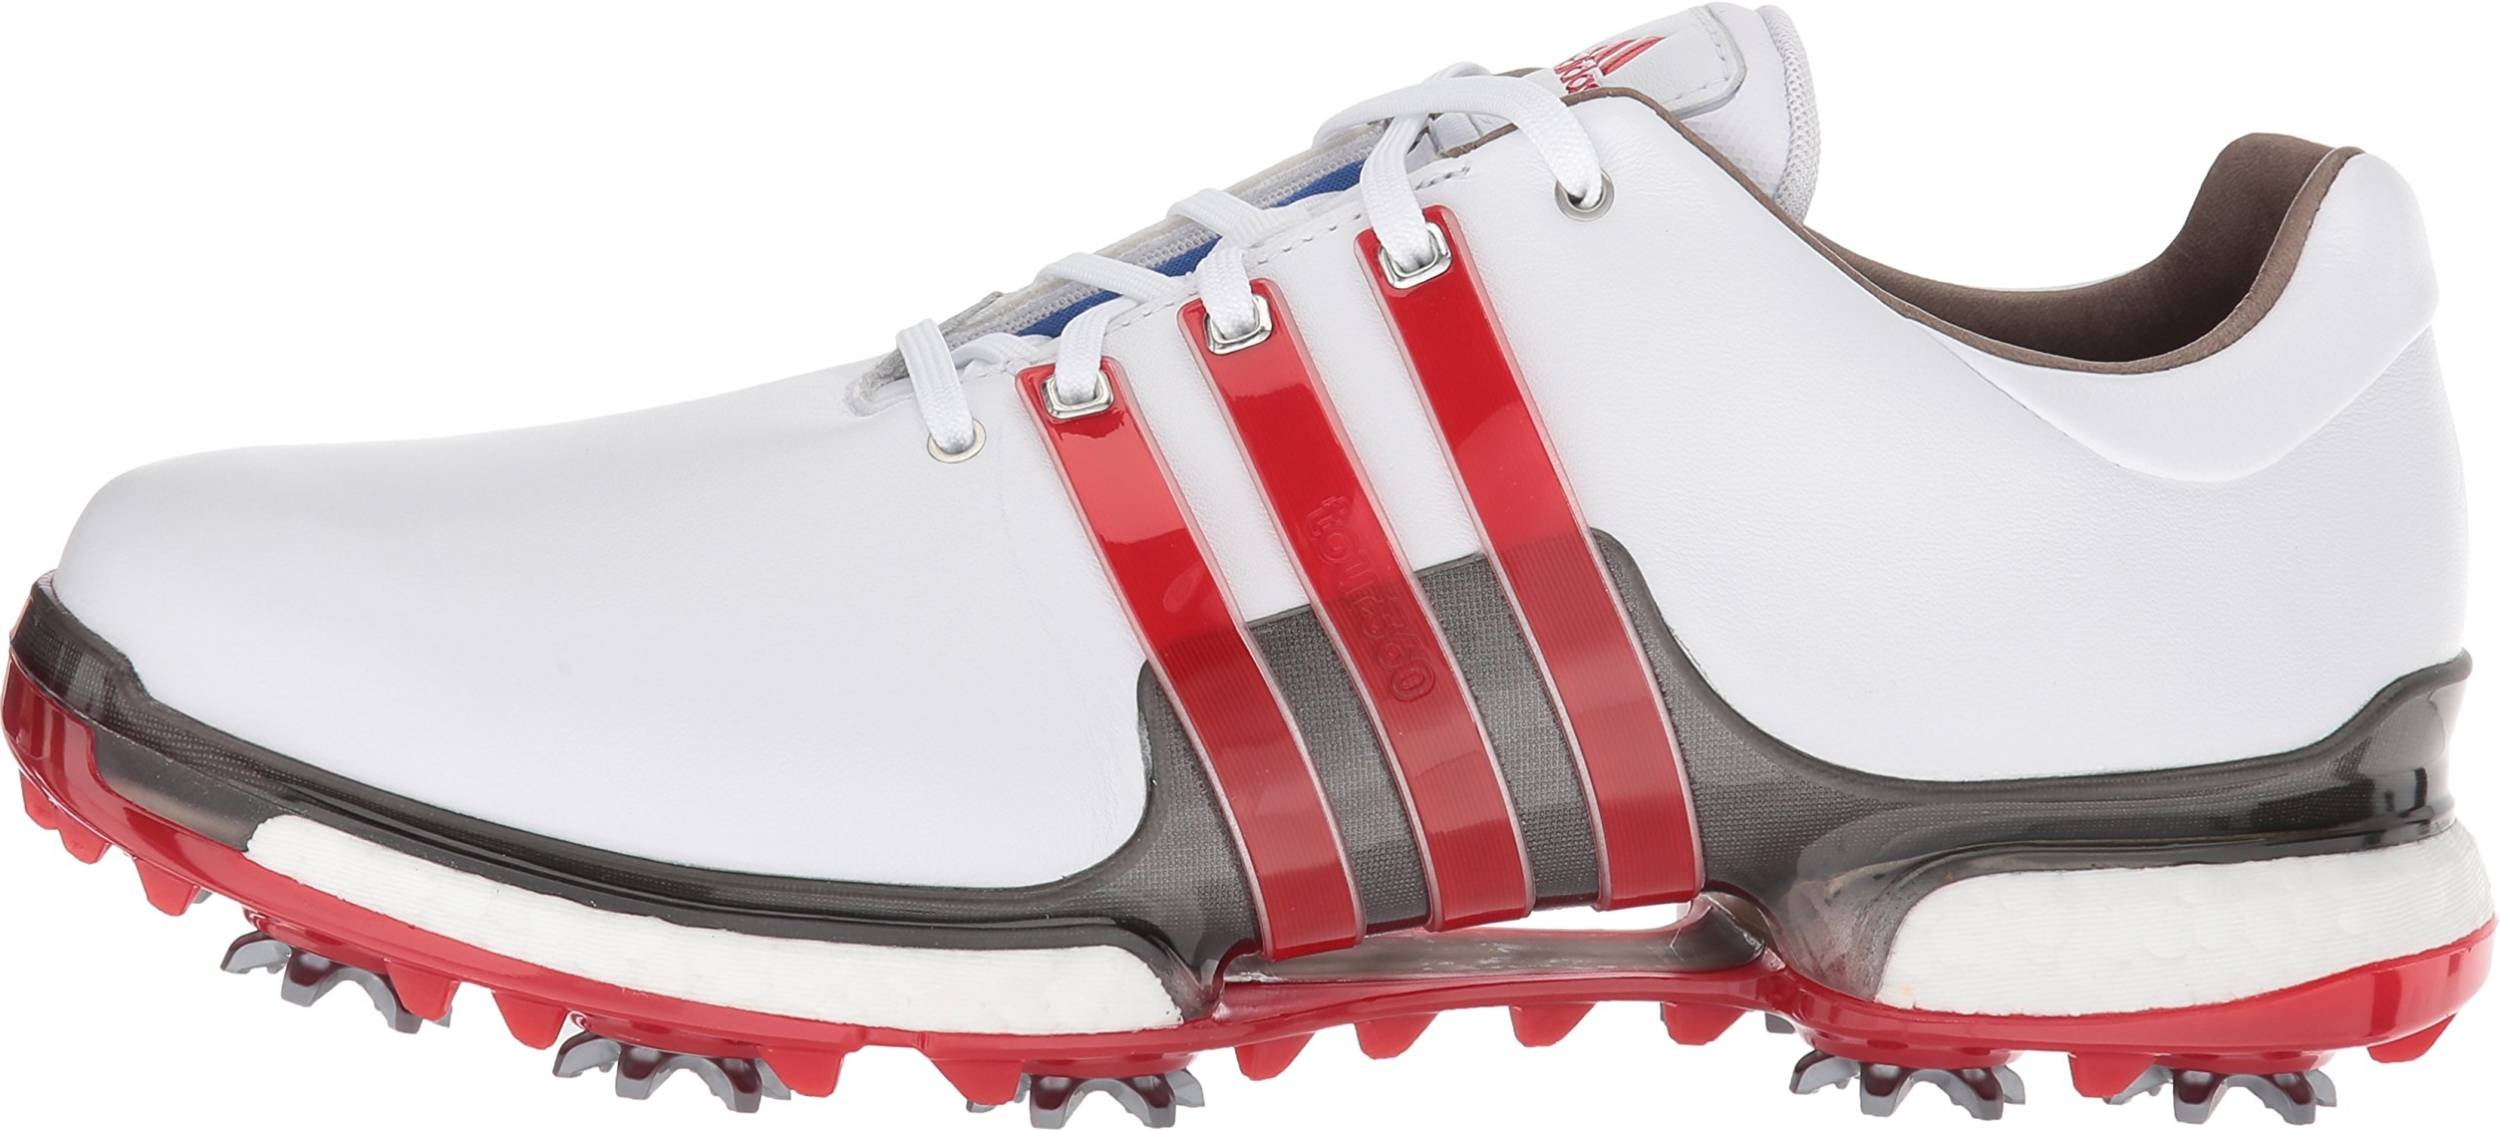 adidas men's tour 360 boost 2.0 golf shoe